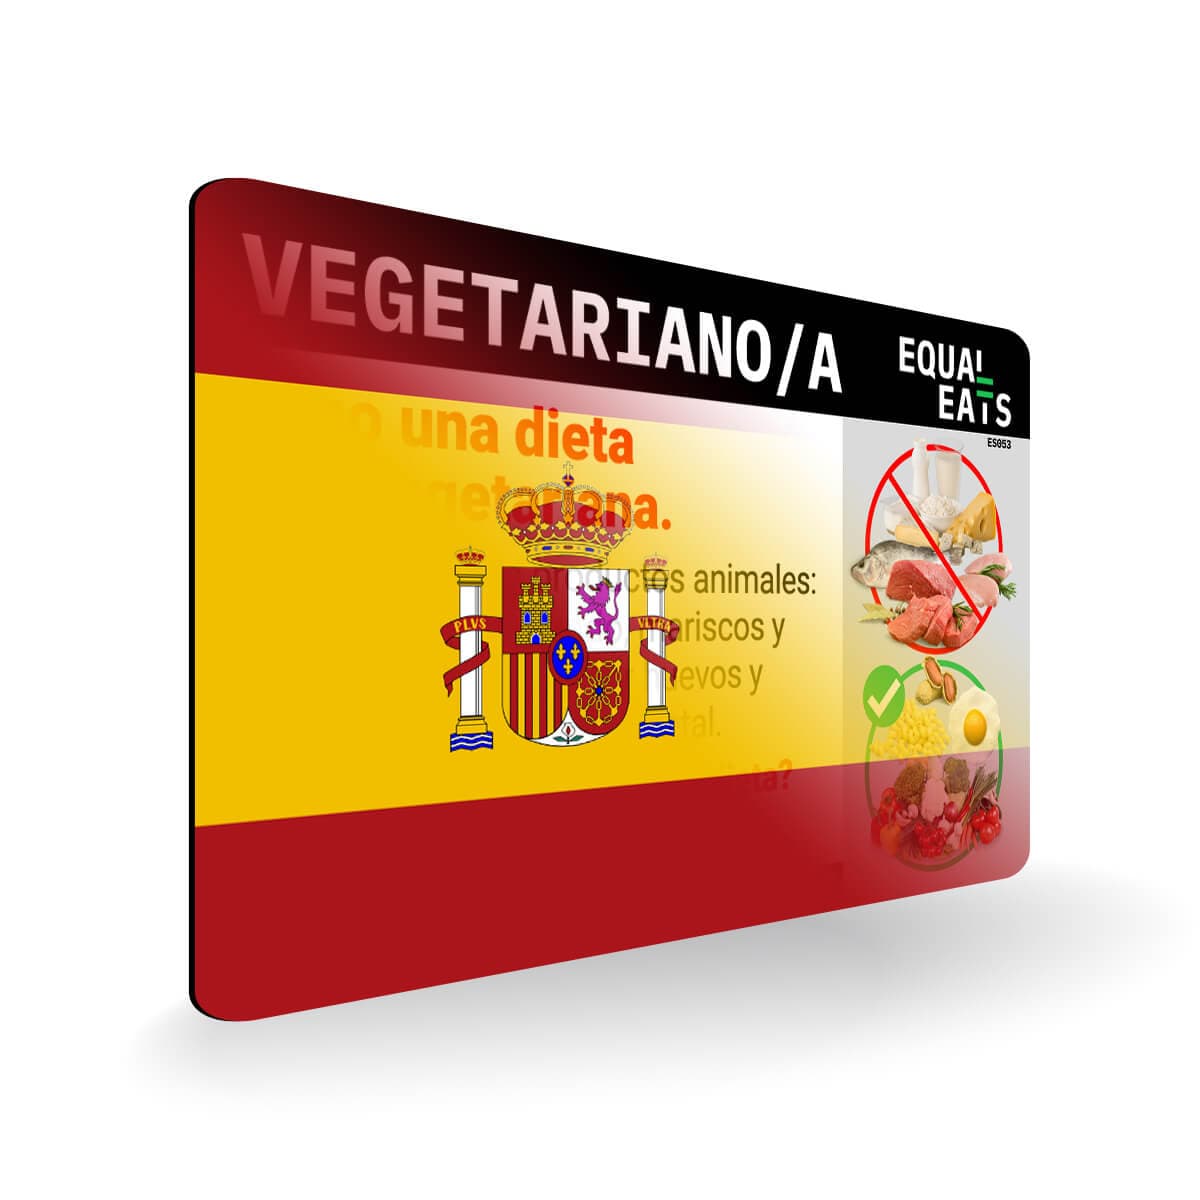 Ovo Vegetarian in Spanish. Card for Vegetarian in Spain